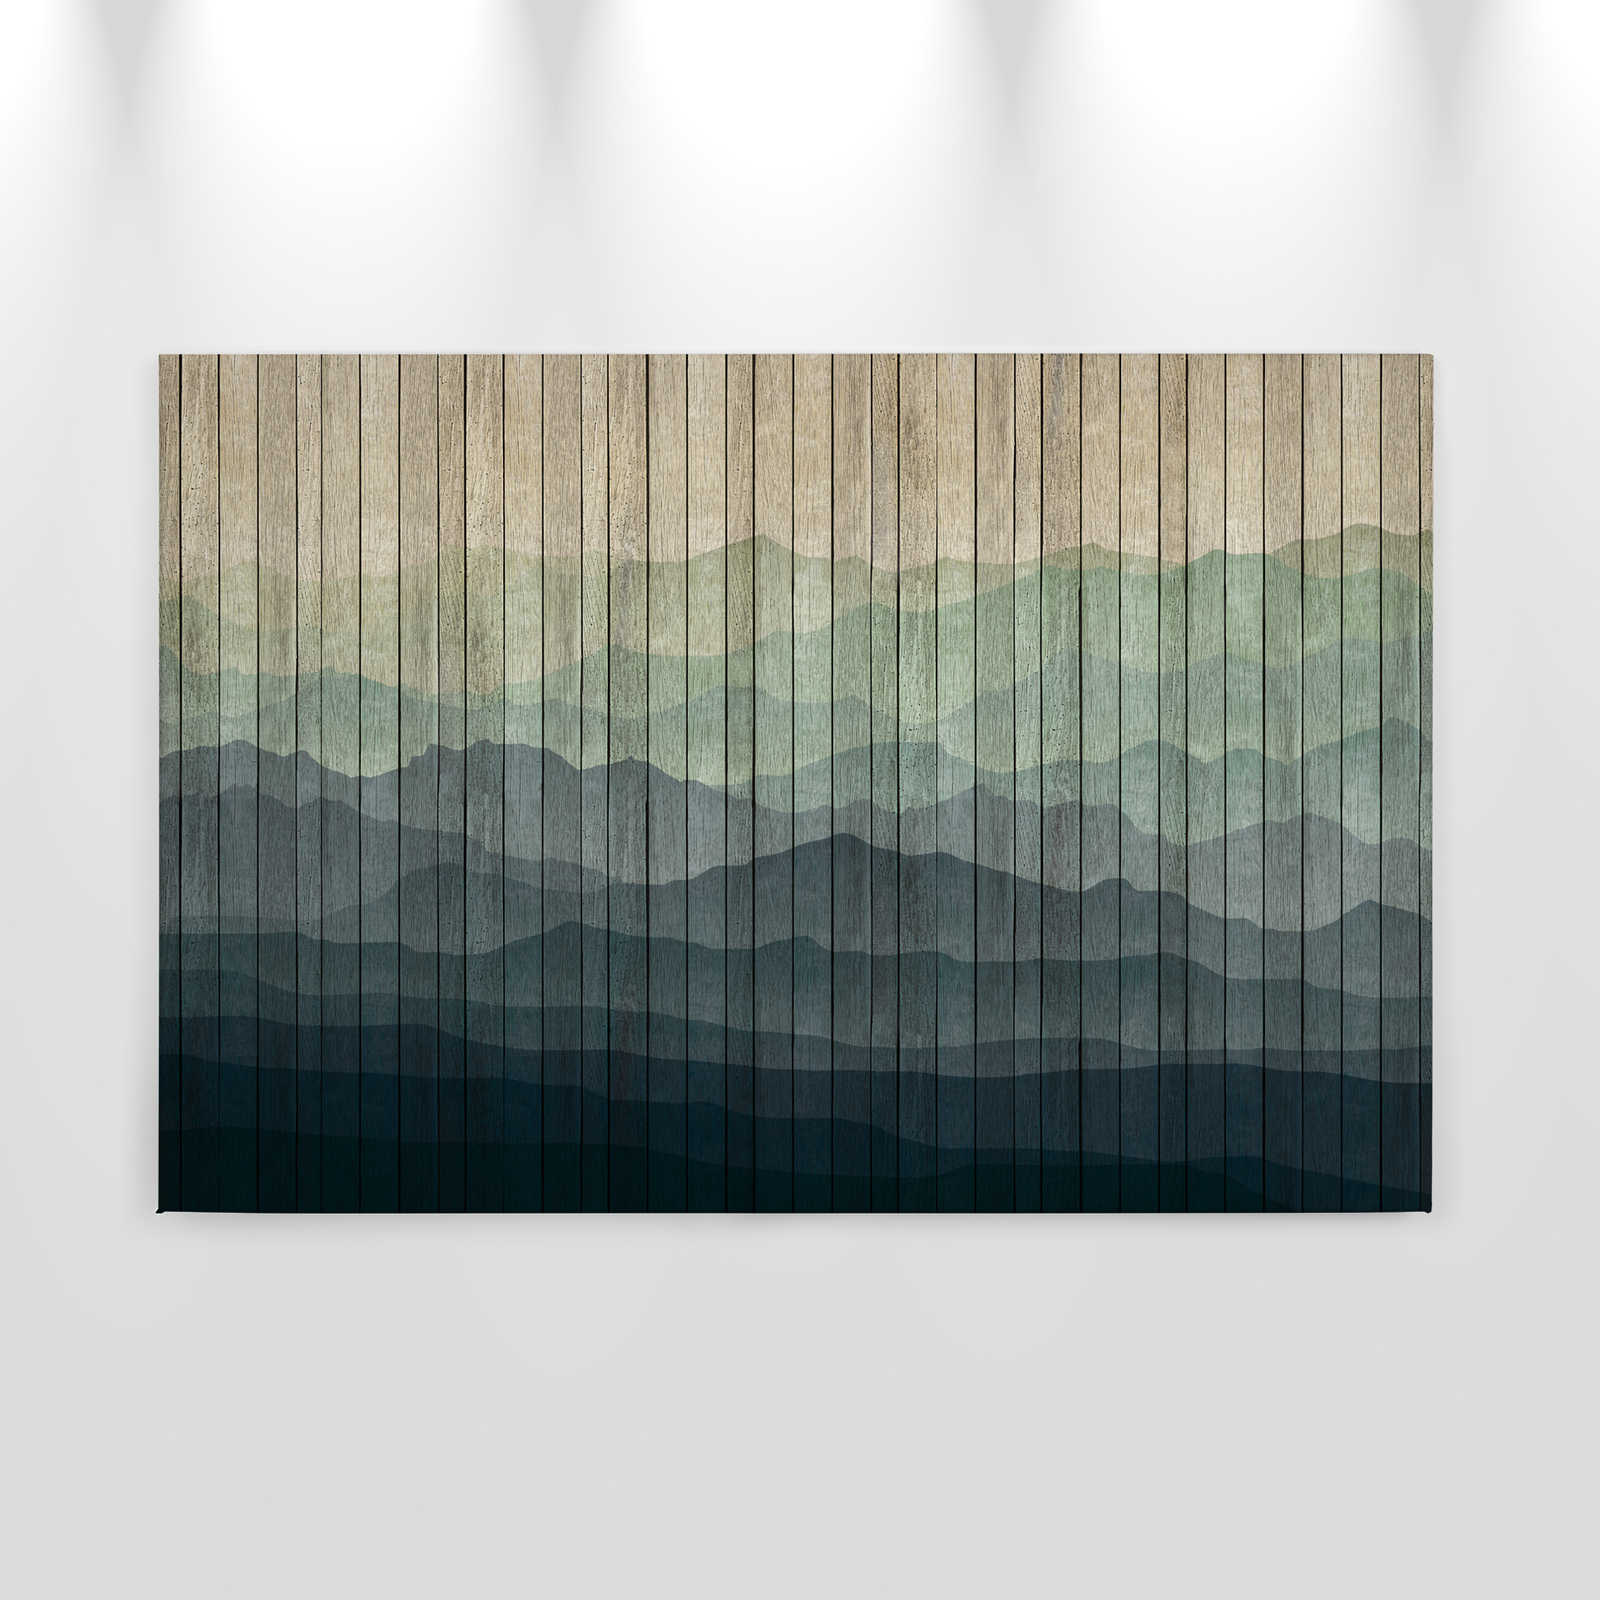             Mountains 1 - modern canvas picture mountain landscape & board optics - 0,90 m x 0,60 m
        